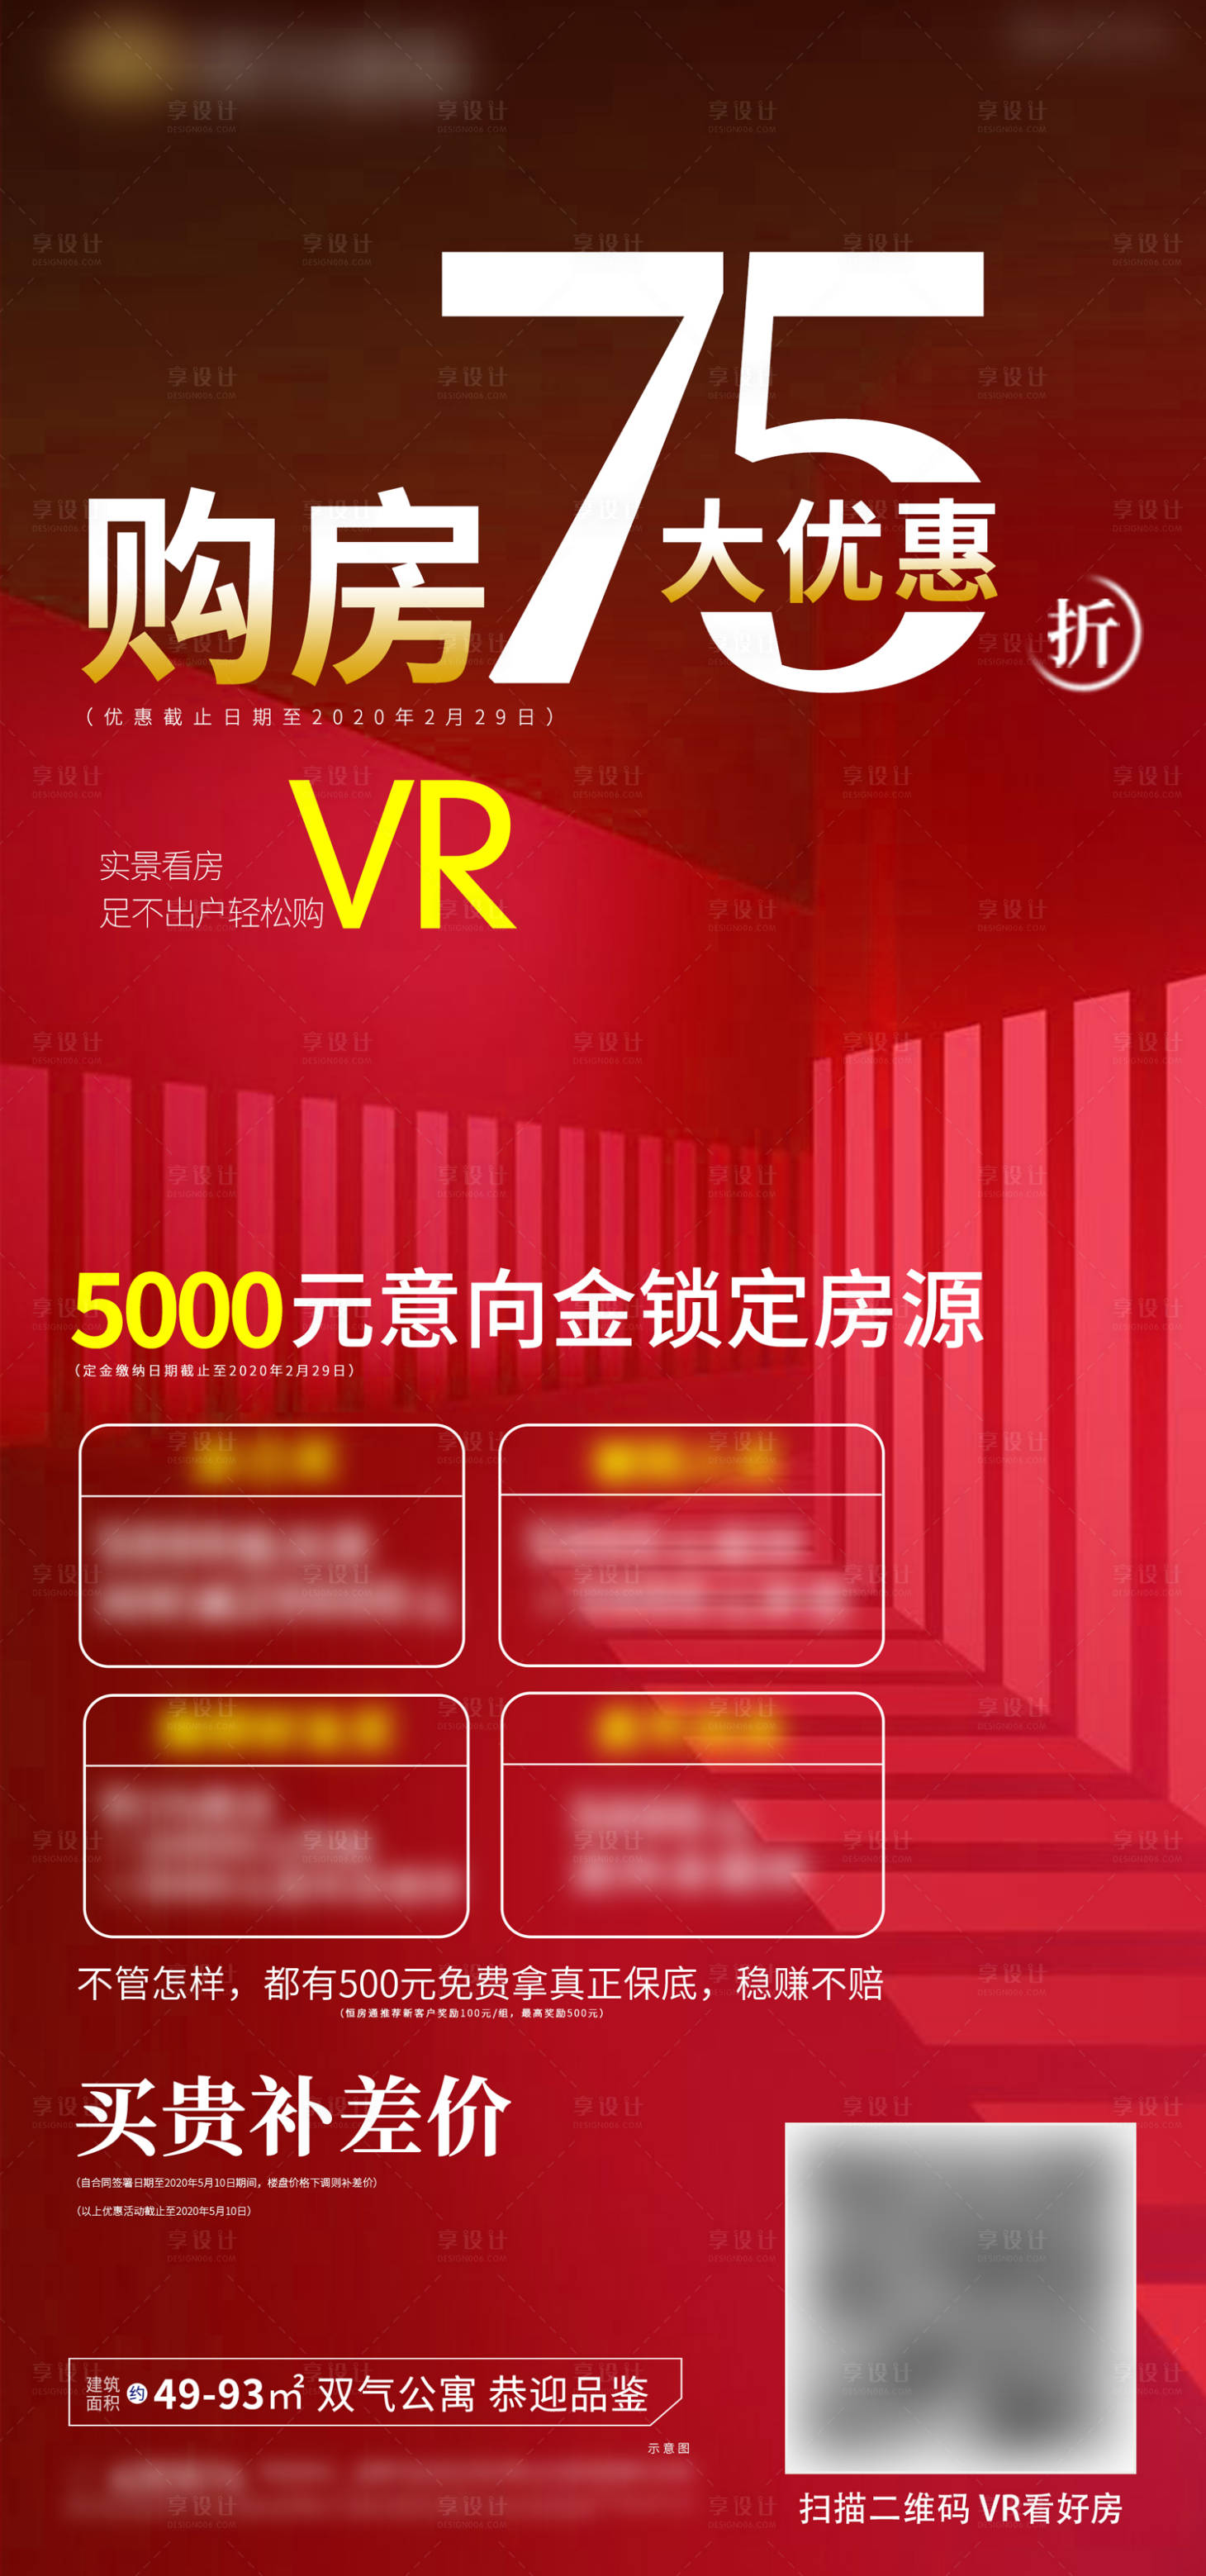 VR线上购房单图-源文件【享设计】